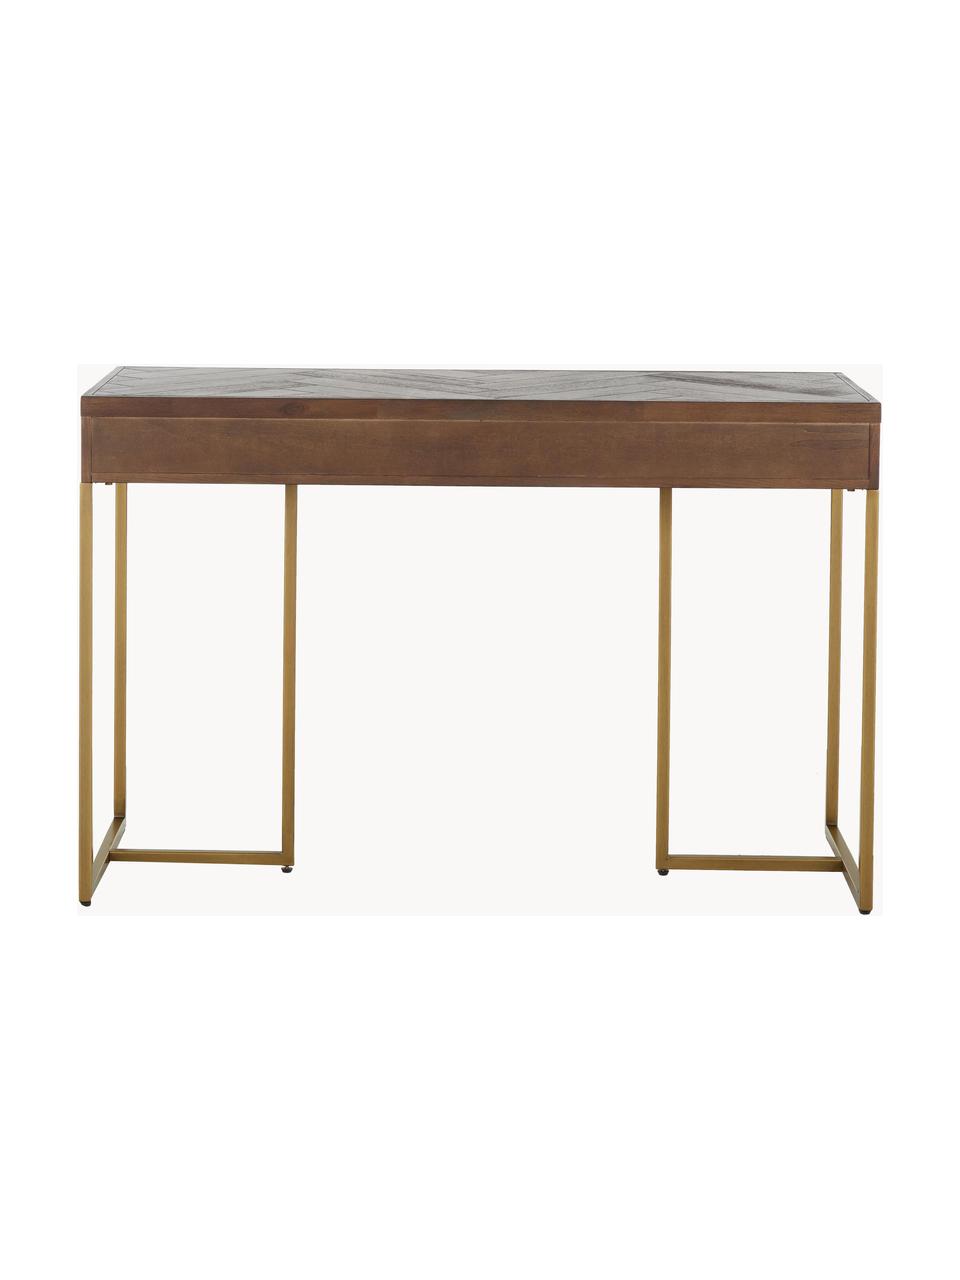 Konzolový stolek s dýhou z  akáciového dřeva Class, Dřevo, Š 120 cm, H 45 cm